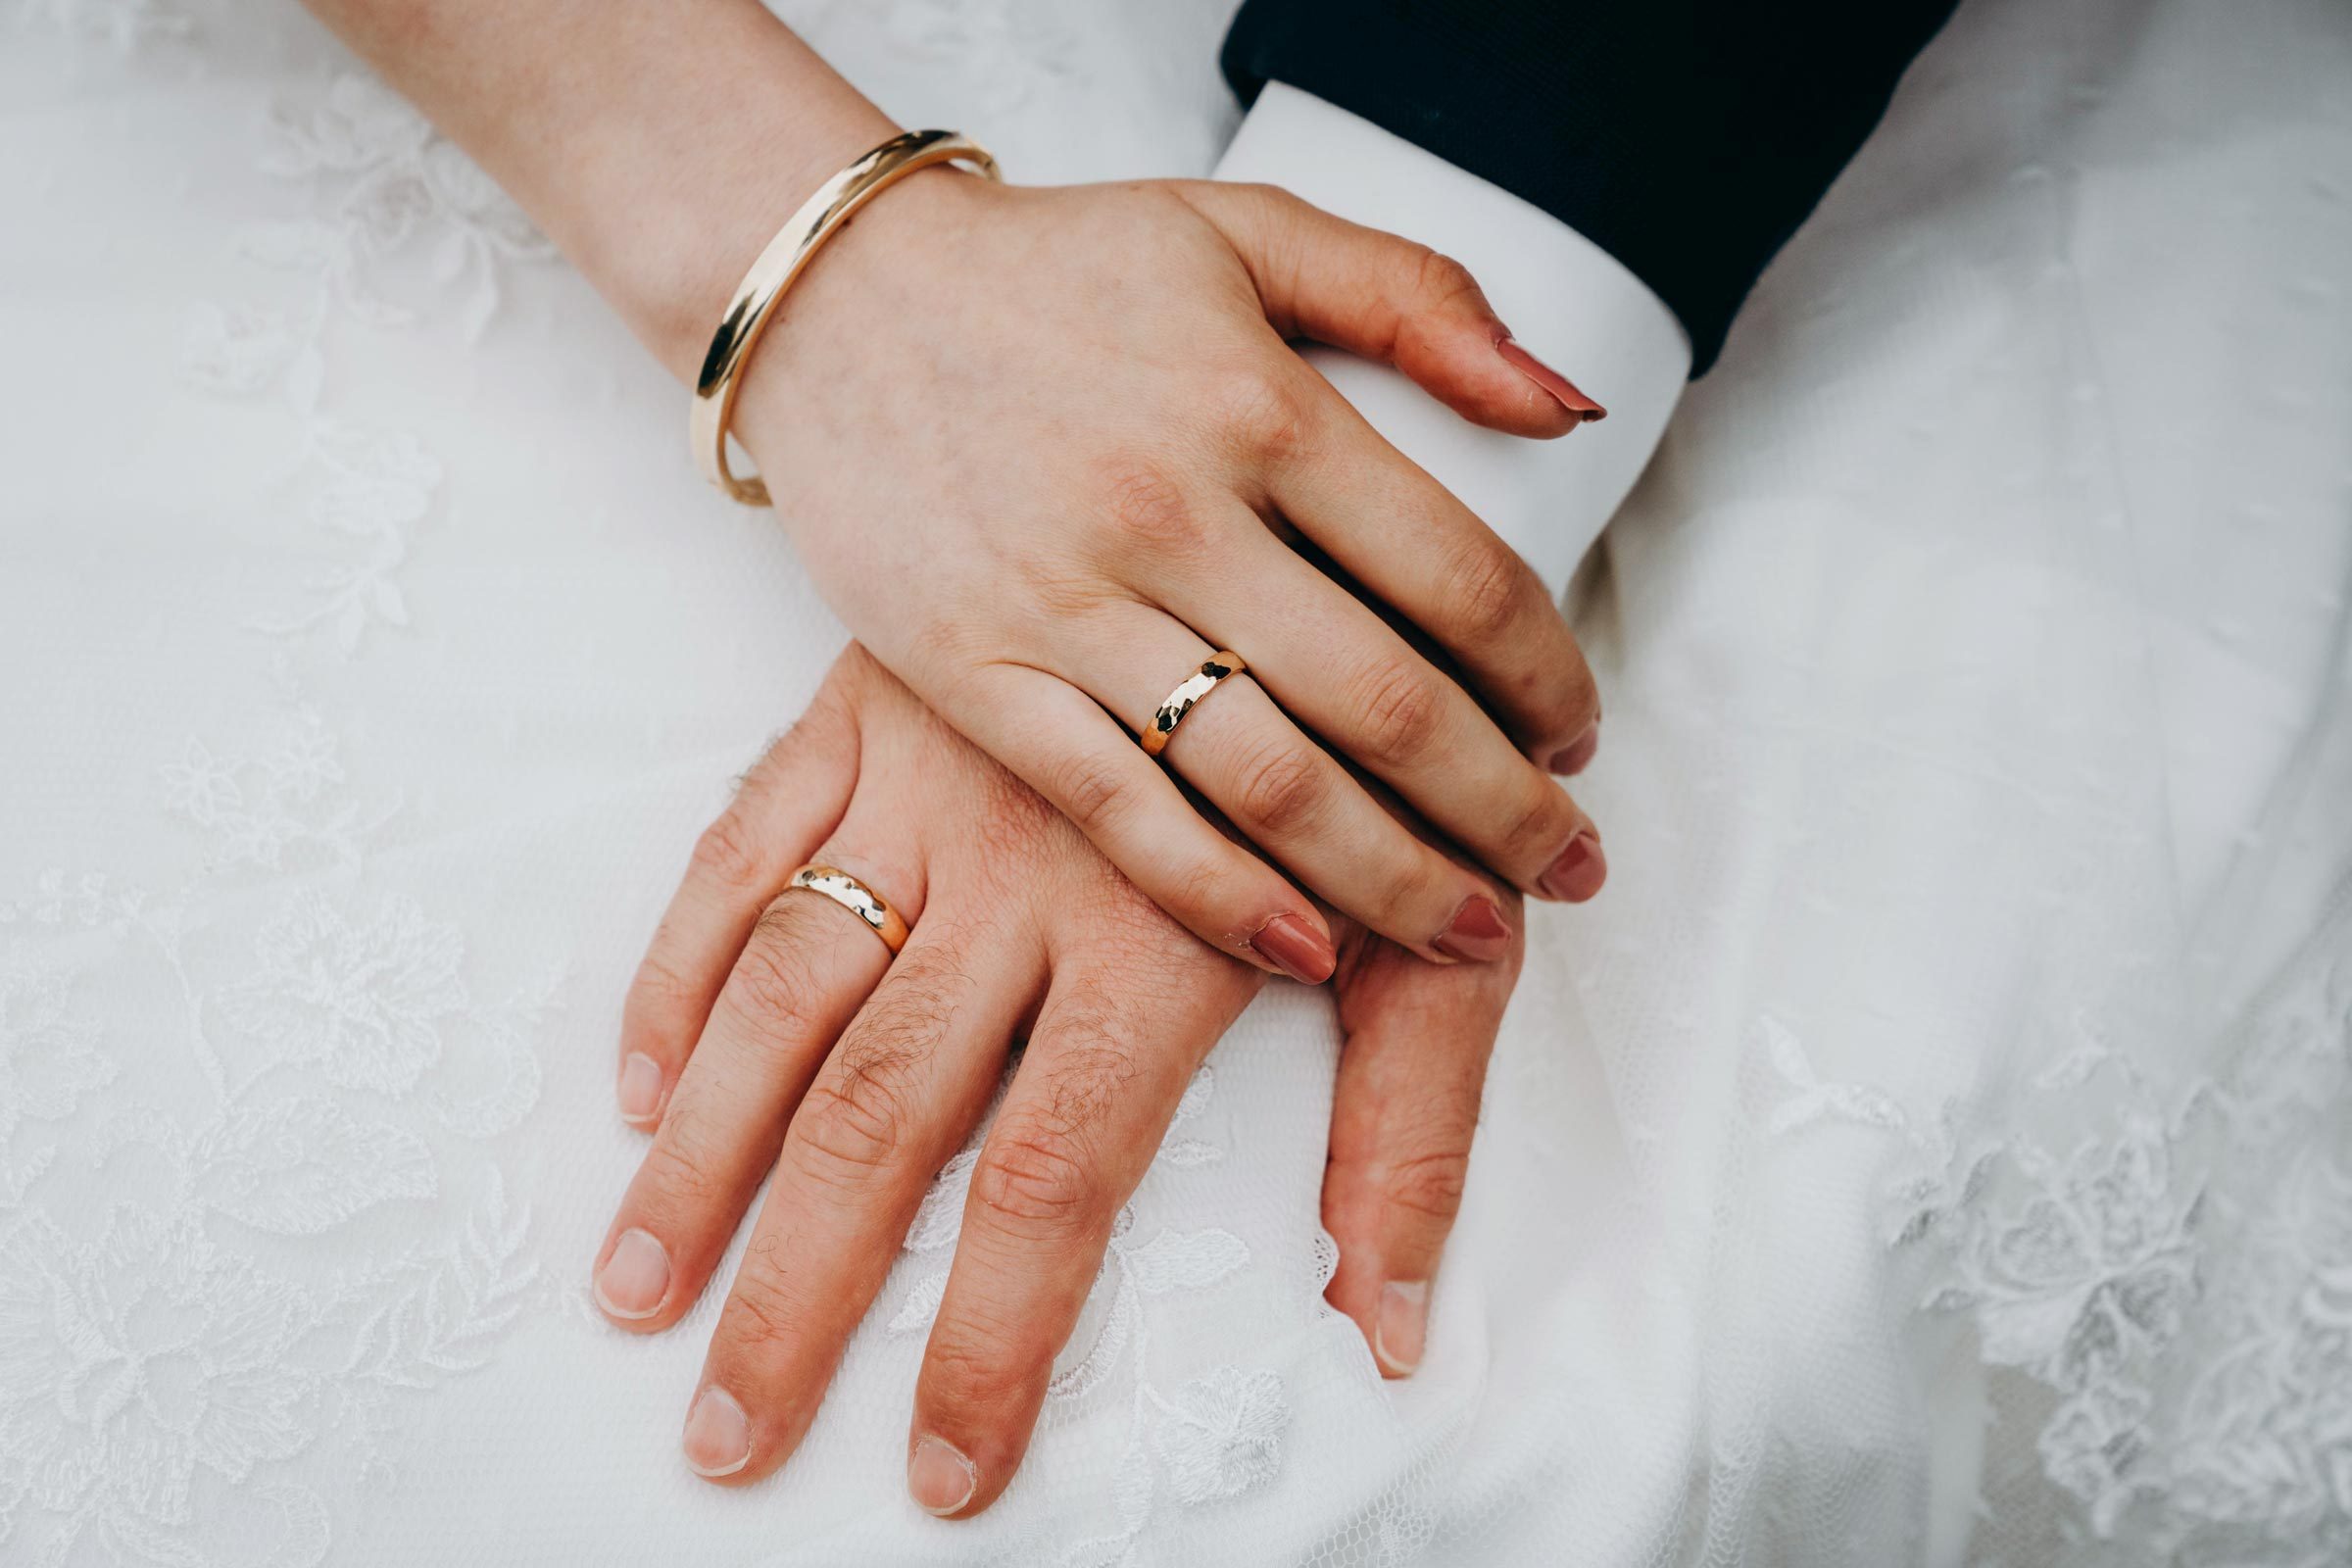 Min Toezicht houden Schaken The Ring Finger: History of Wearing Wedding Rings on the Fourth Finger